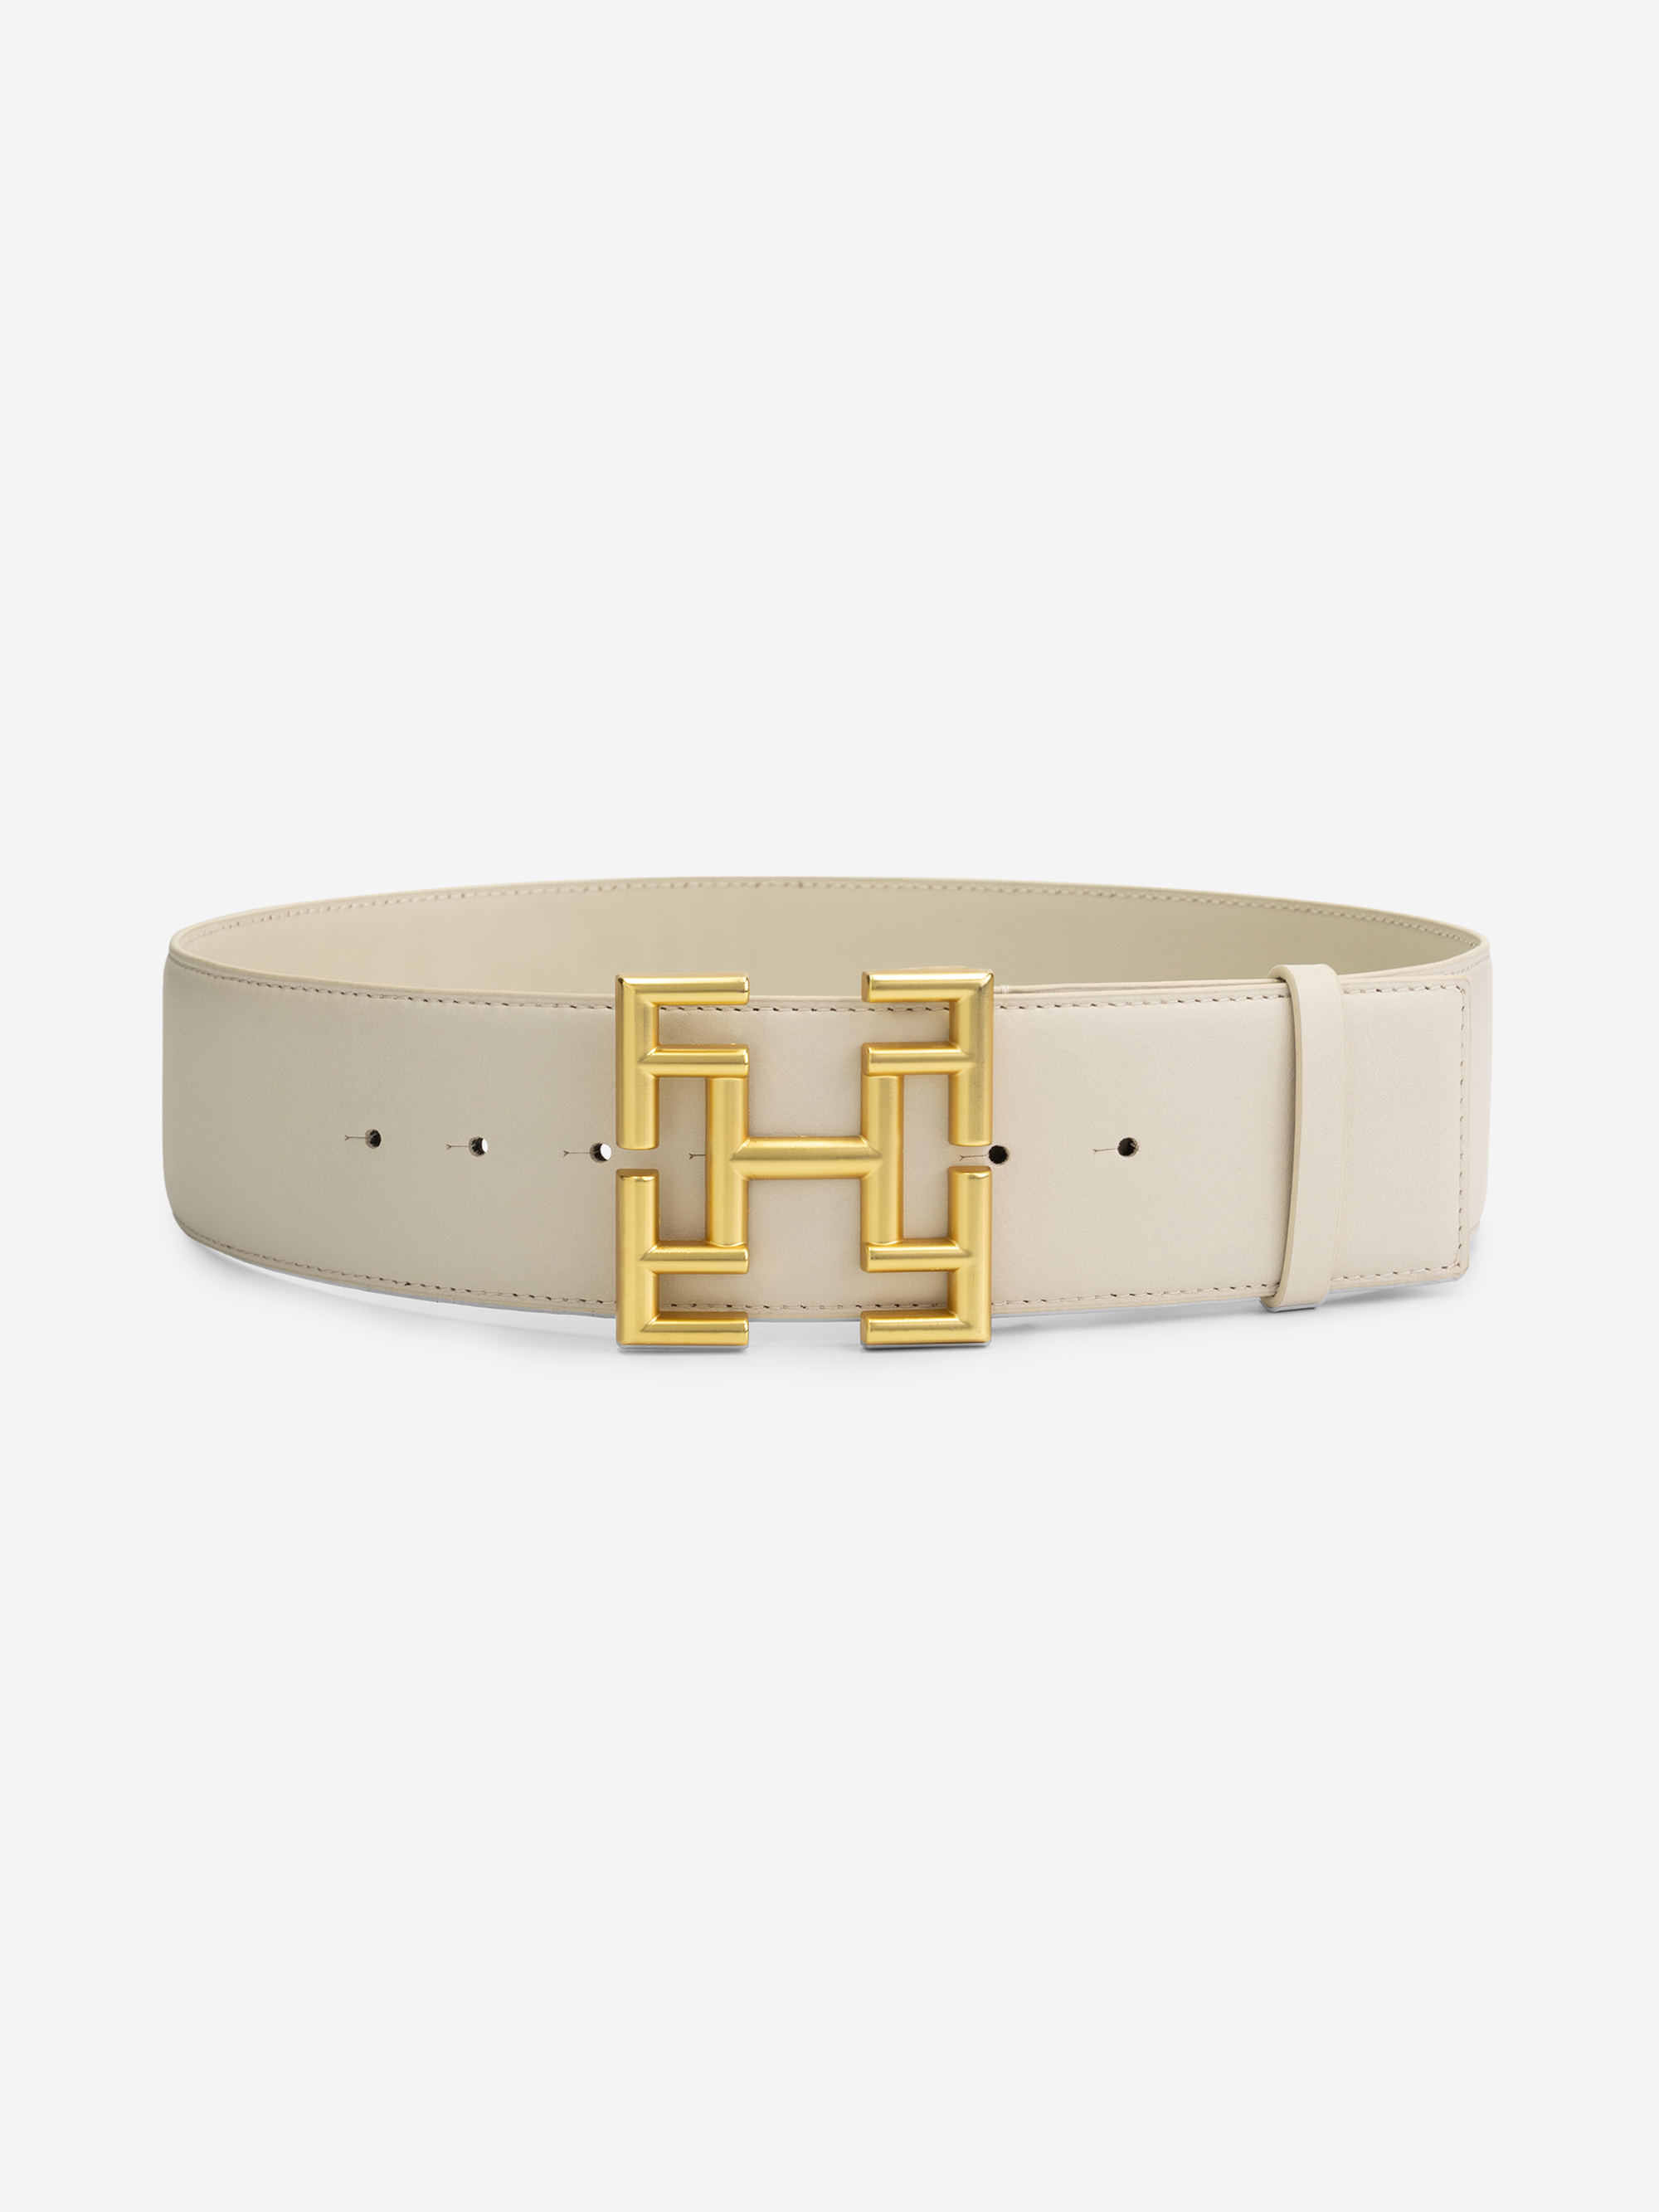 Leather waist belt with logo buckle